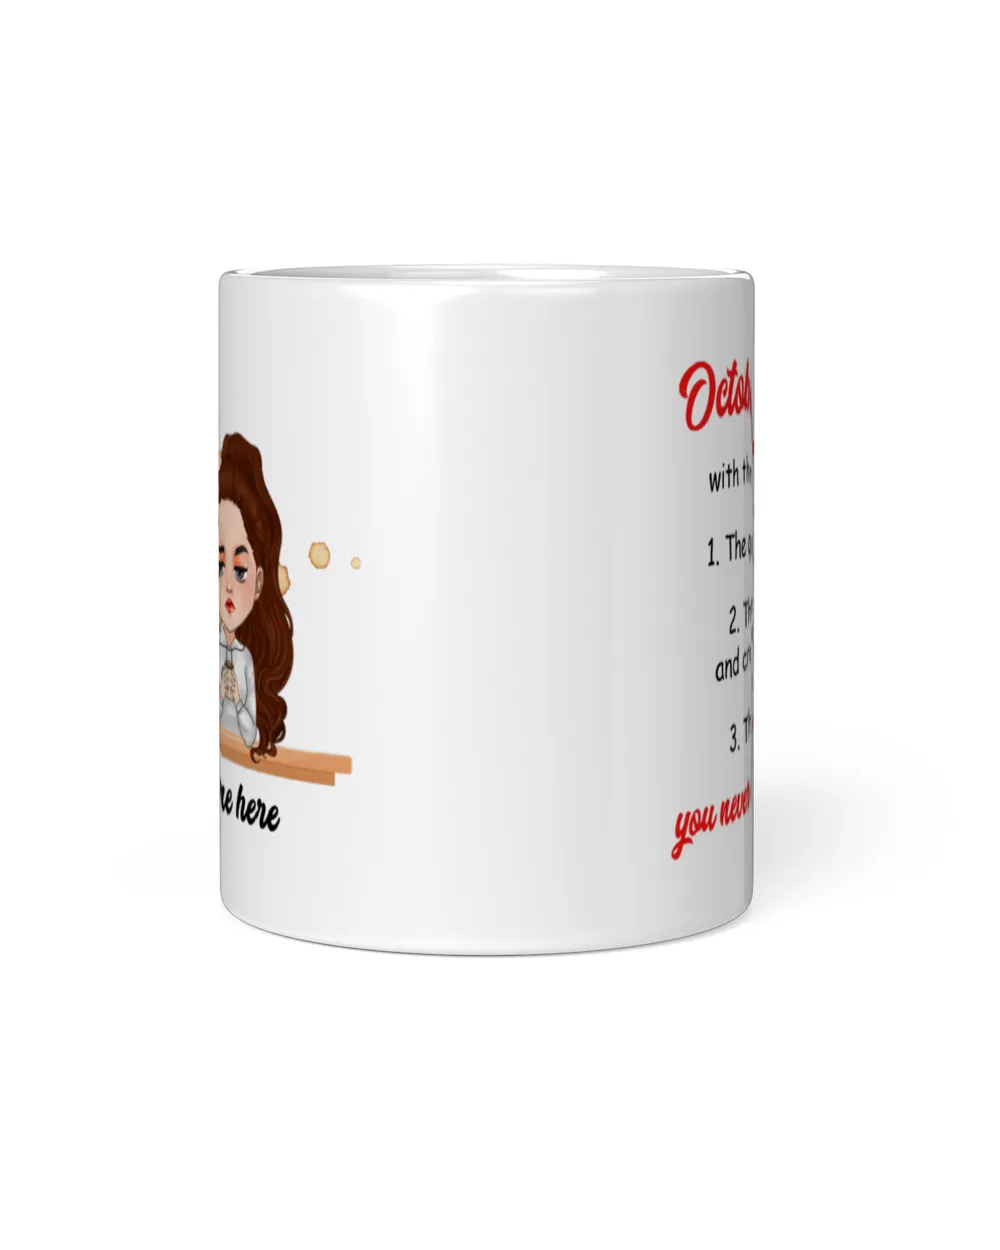 Grumpy Girl Coffee Custom Mug October Girl With Three Sides Personalized Gift